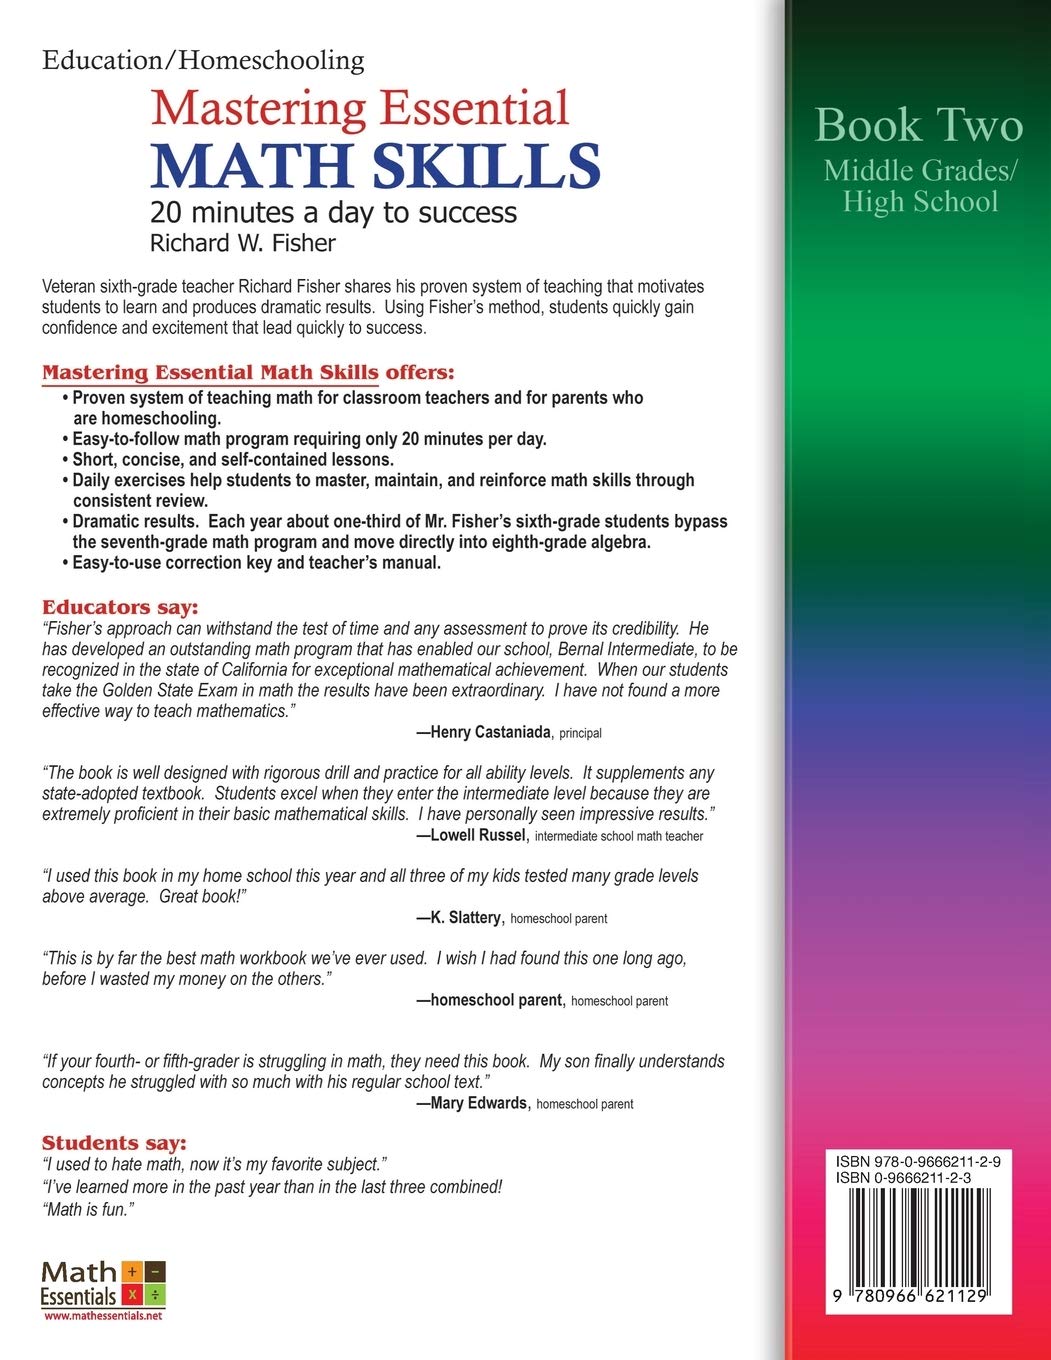 chính　Day　hãng　Mua　Minutes　to　Book　Amazon　Mastering　a　Middle　Essential　Mỹ　Math　trên　Grades/High　School　Skills:　20　Success,　2:　2023　Fado